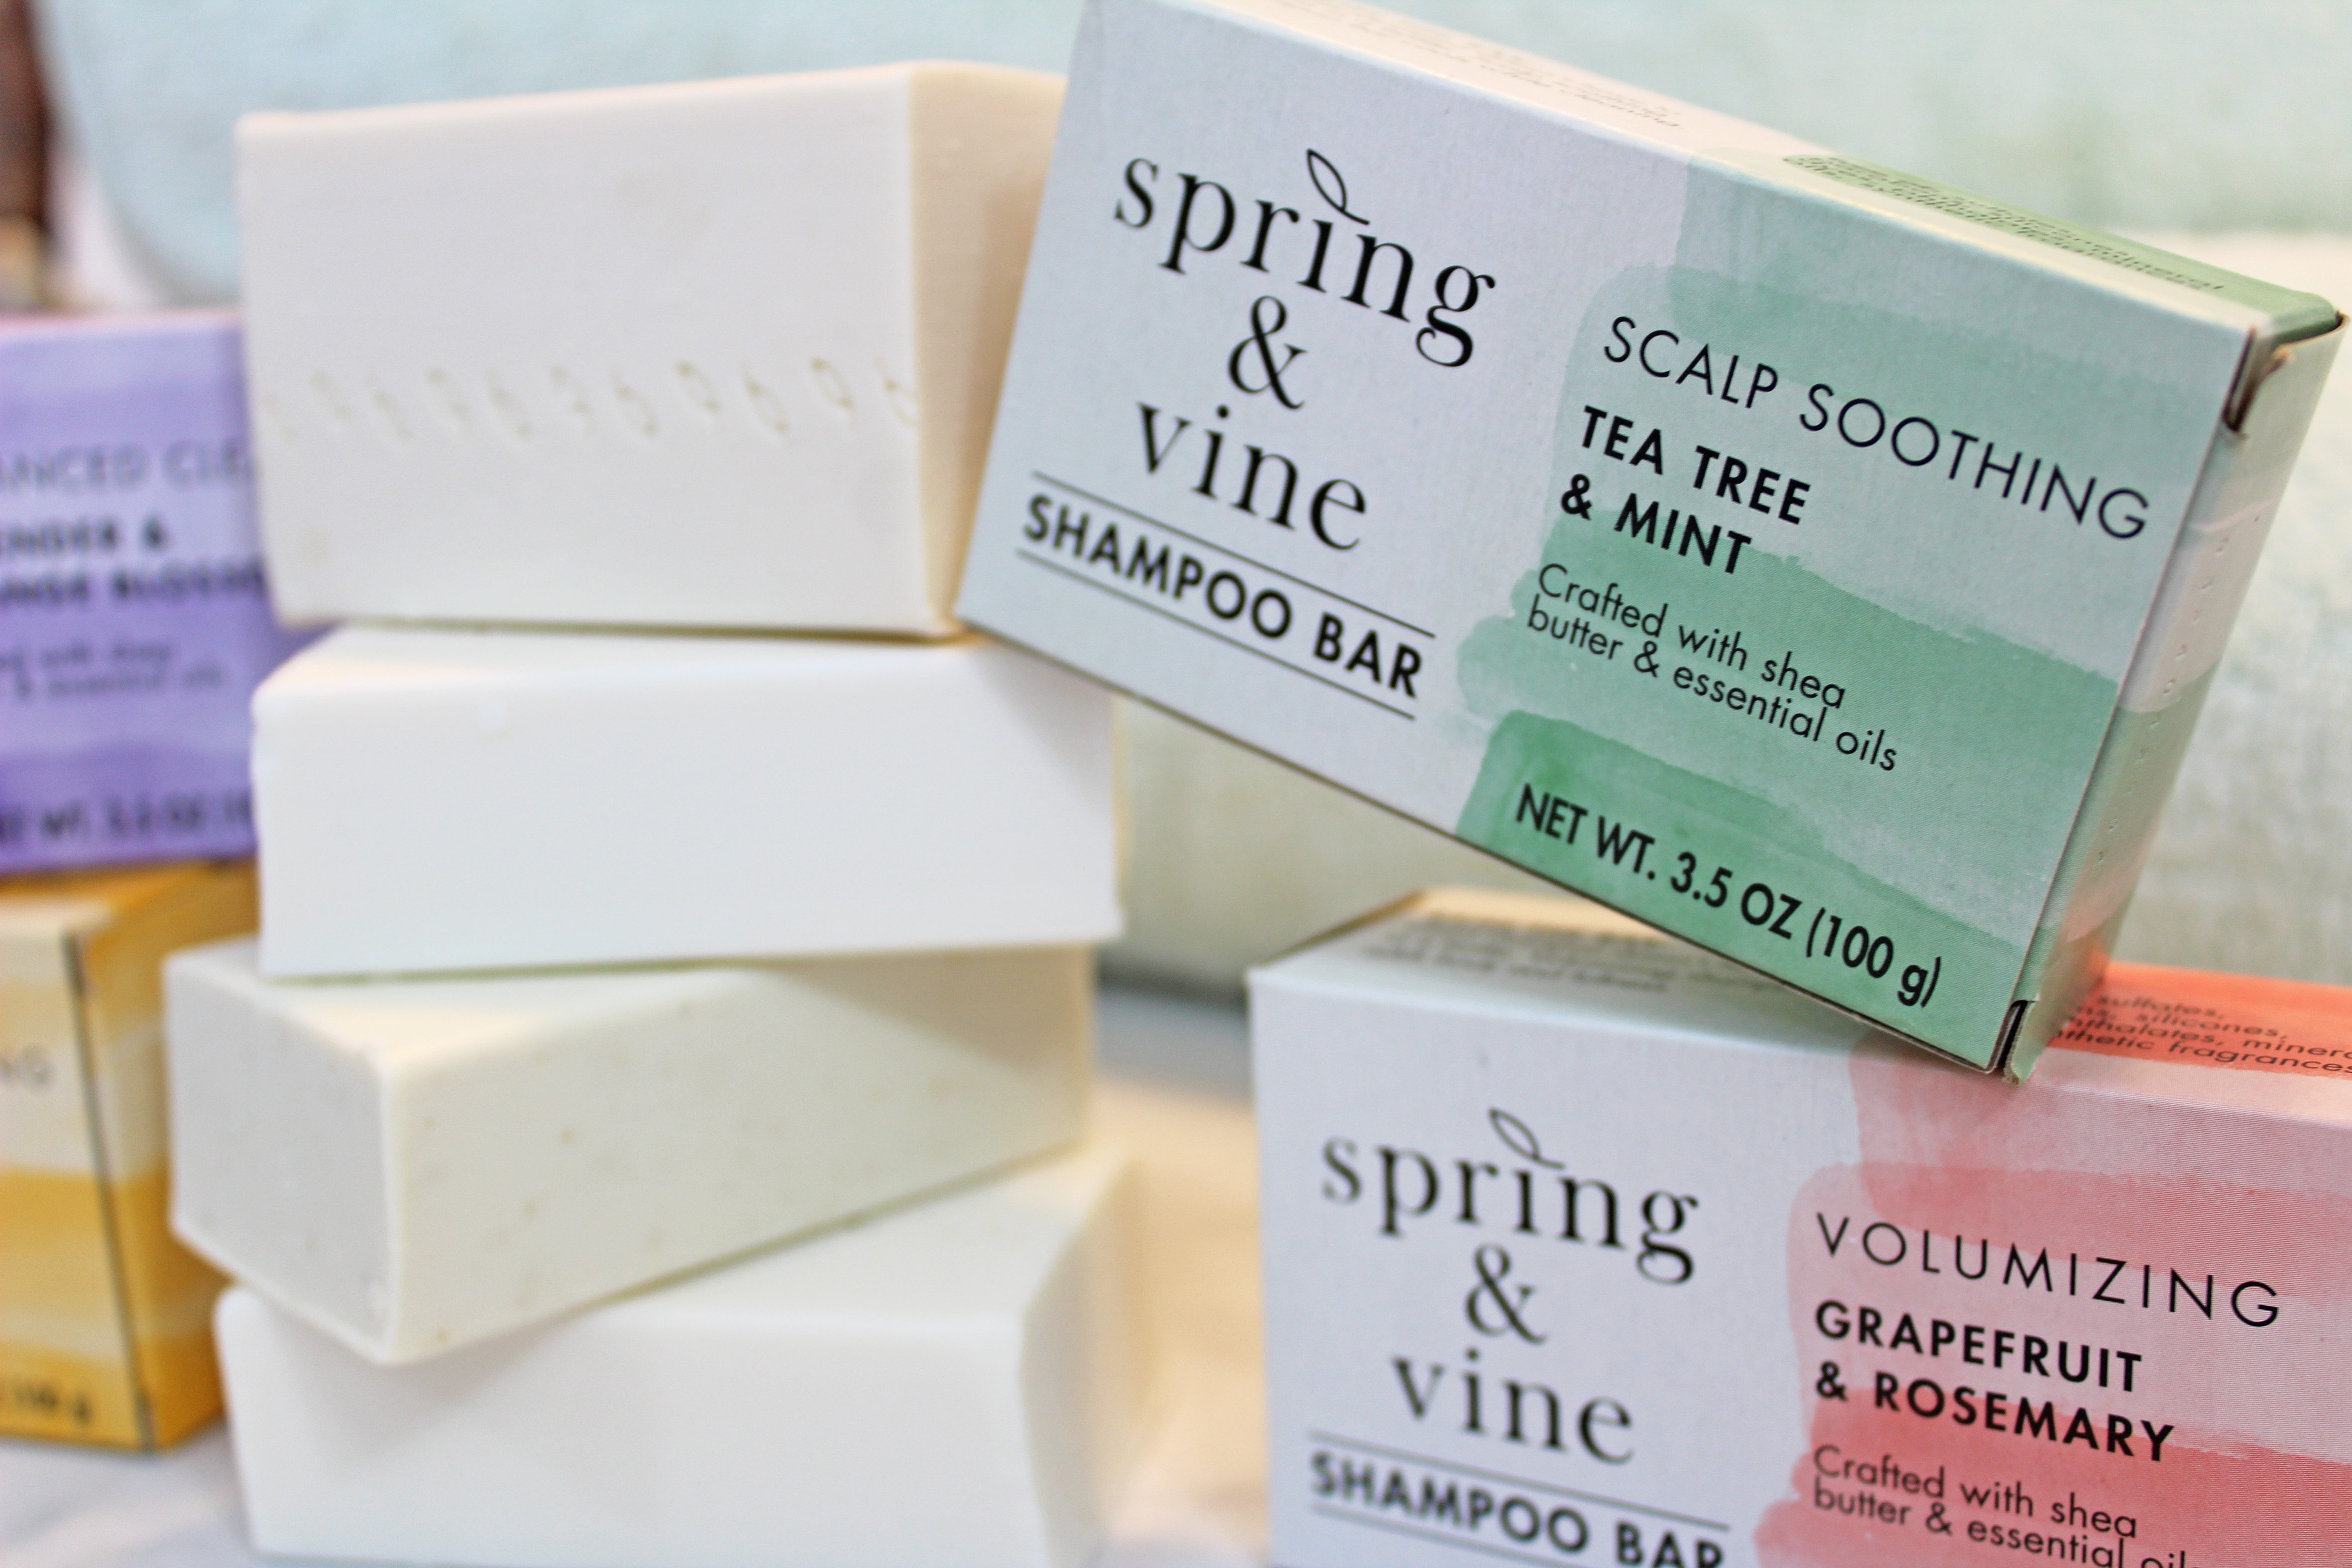 spring and vine shampoo bar review by iliketotalkblog